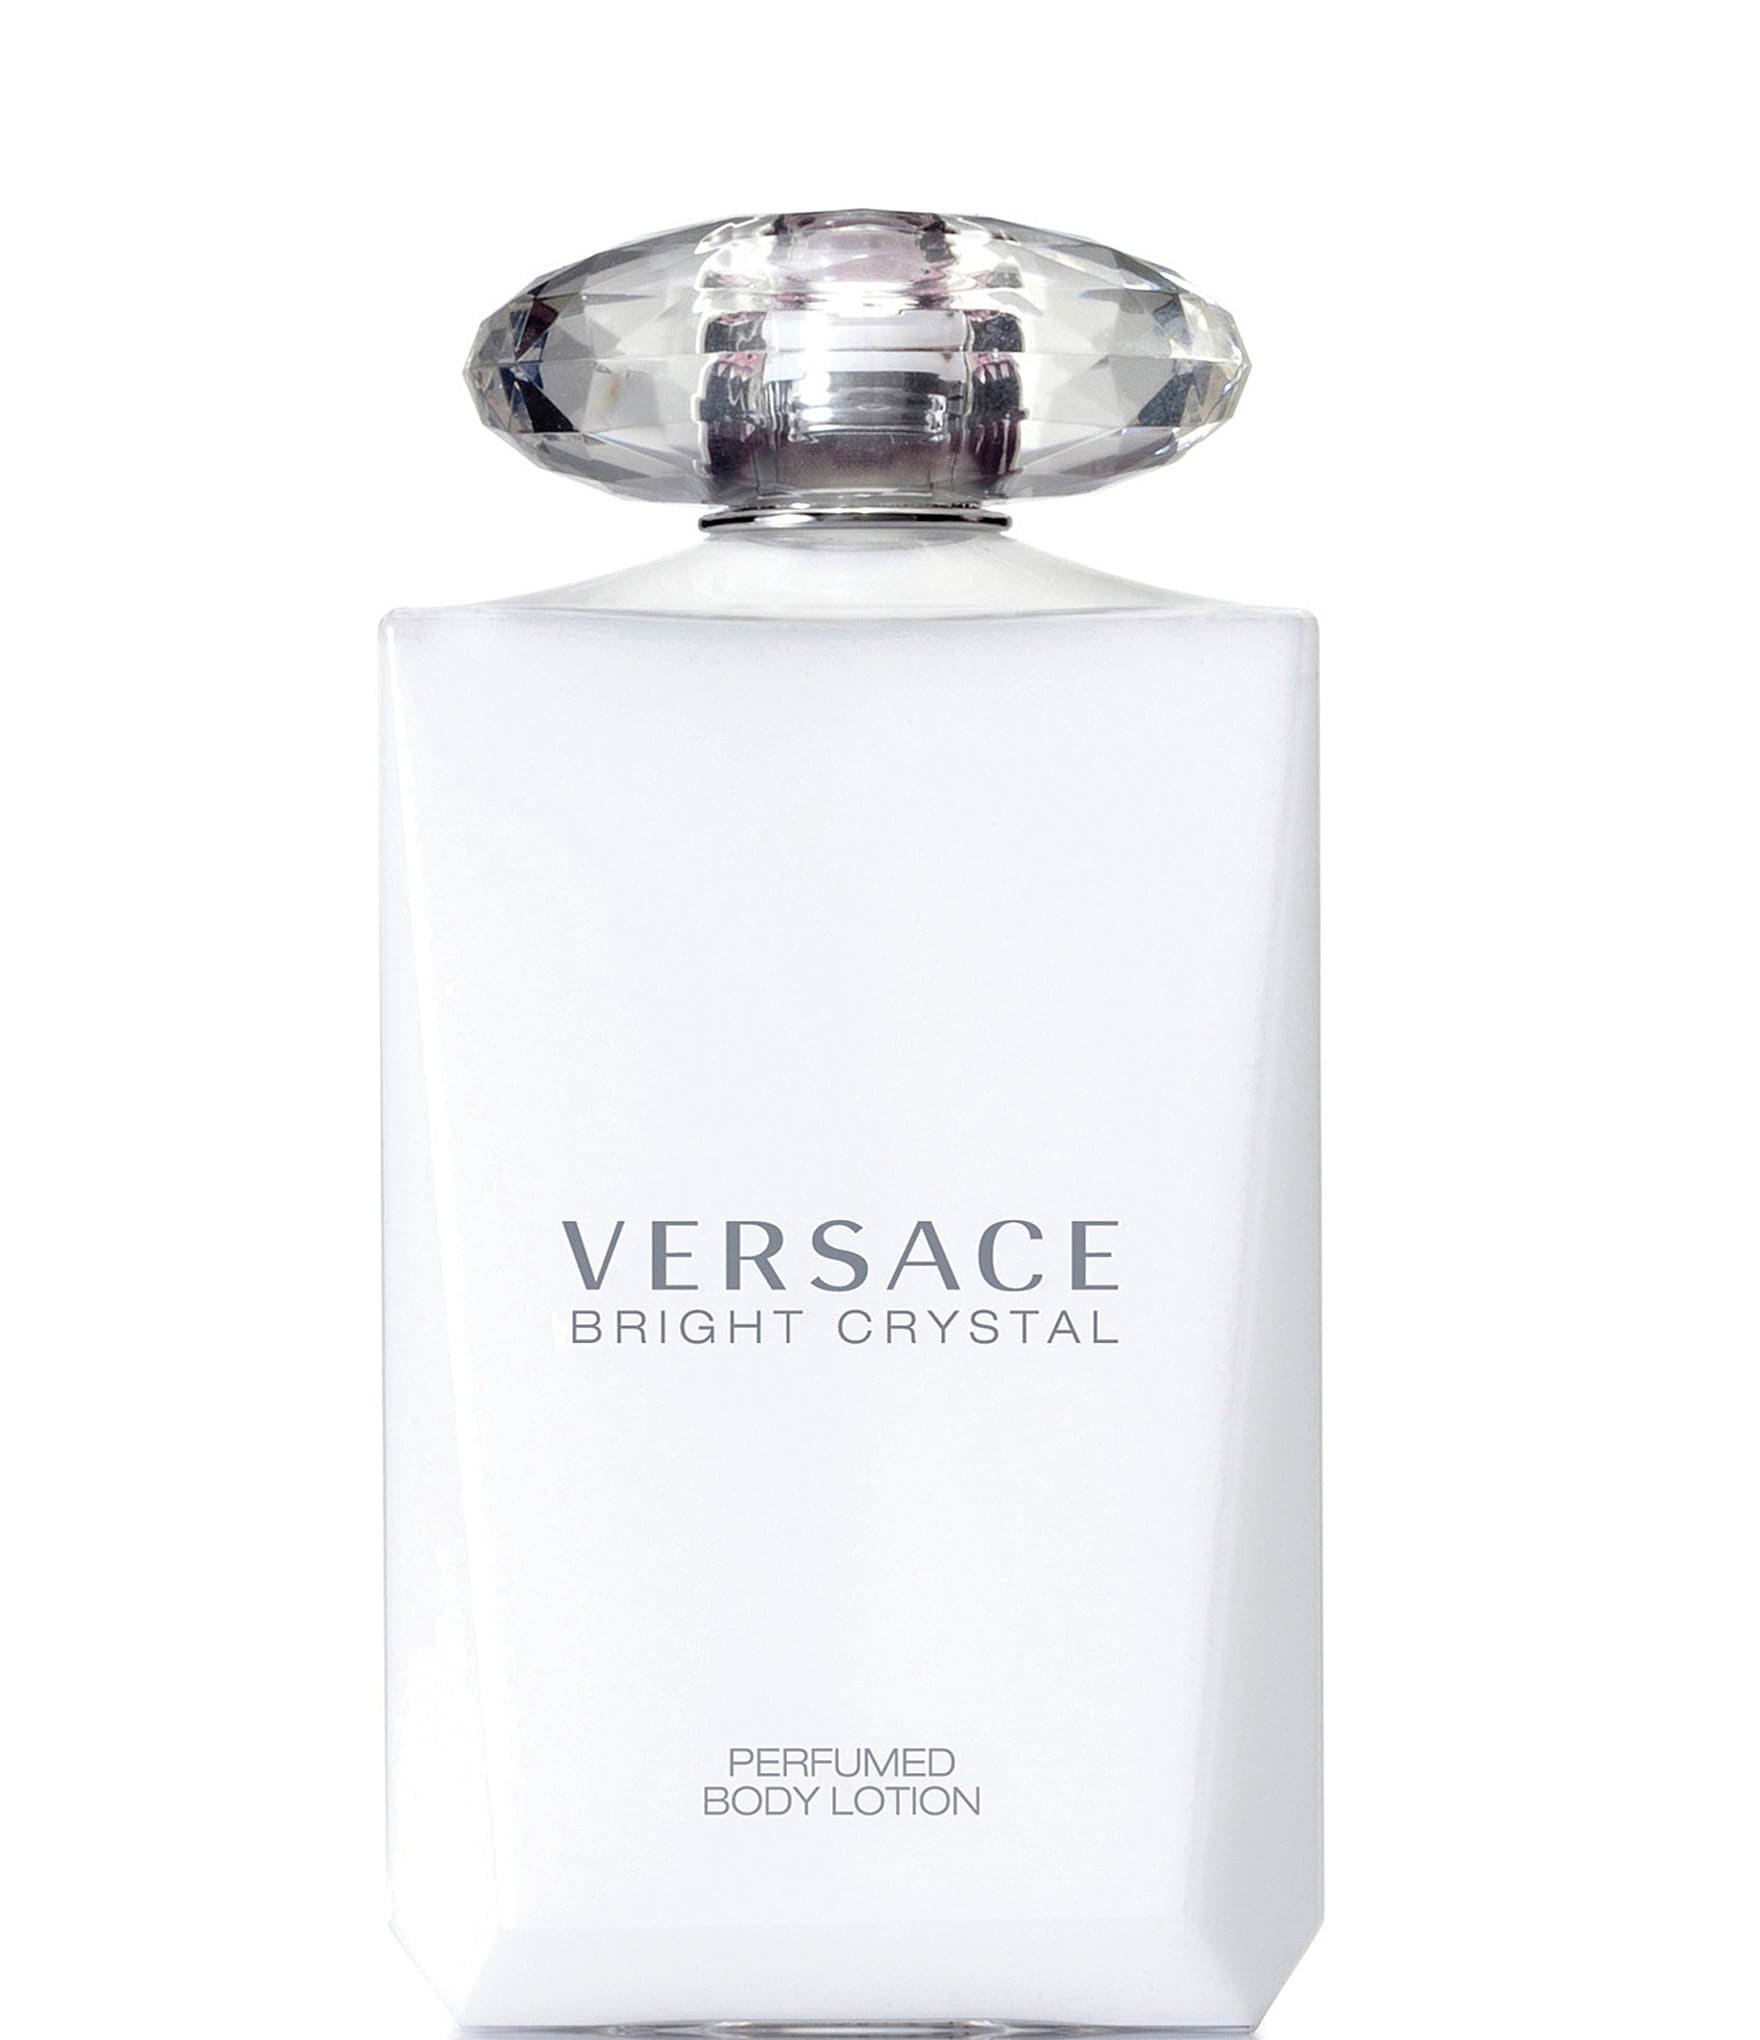 Versace Bright Crystal Eau de Toilette Spray, 3 oz Ingredients and Reviews